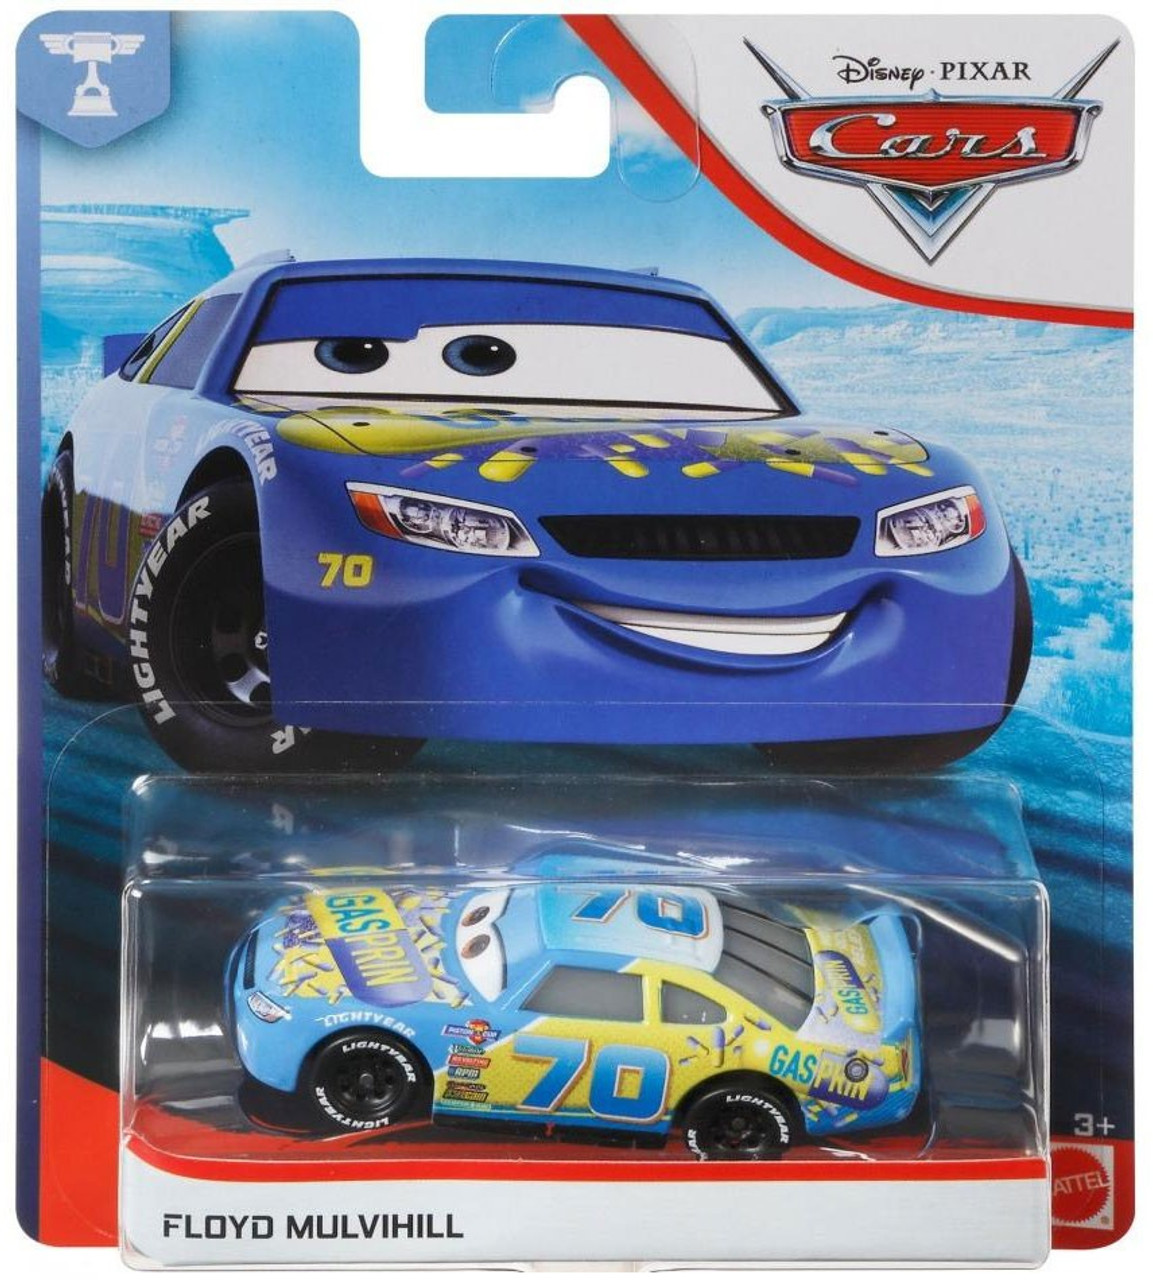 Disney Pixar Cars Cars 3 Piston Cup Racers Floyd Mulvihill Diecast Car Loose Mattel Toys Toywiz - disney pixar cars 3 roblox